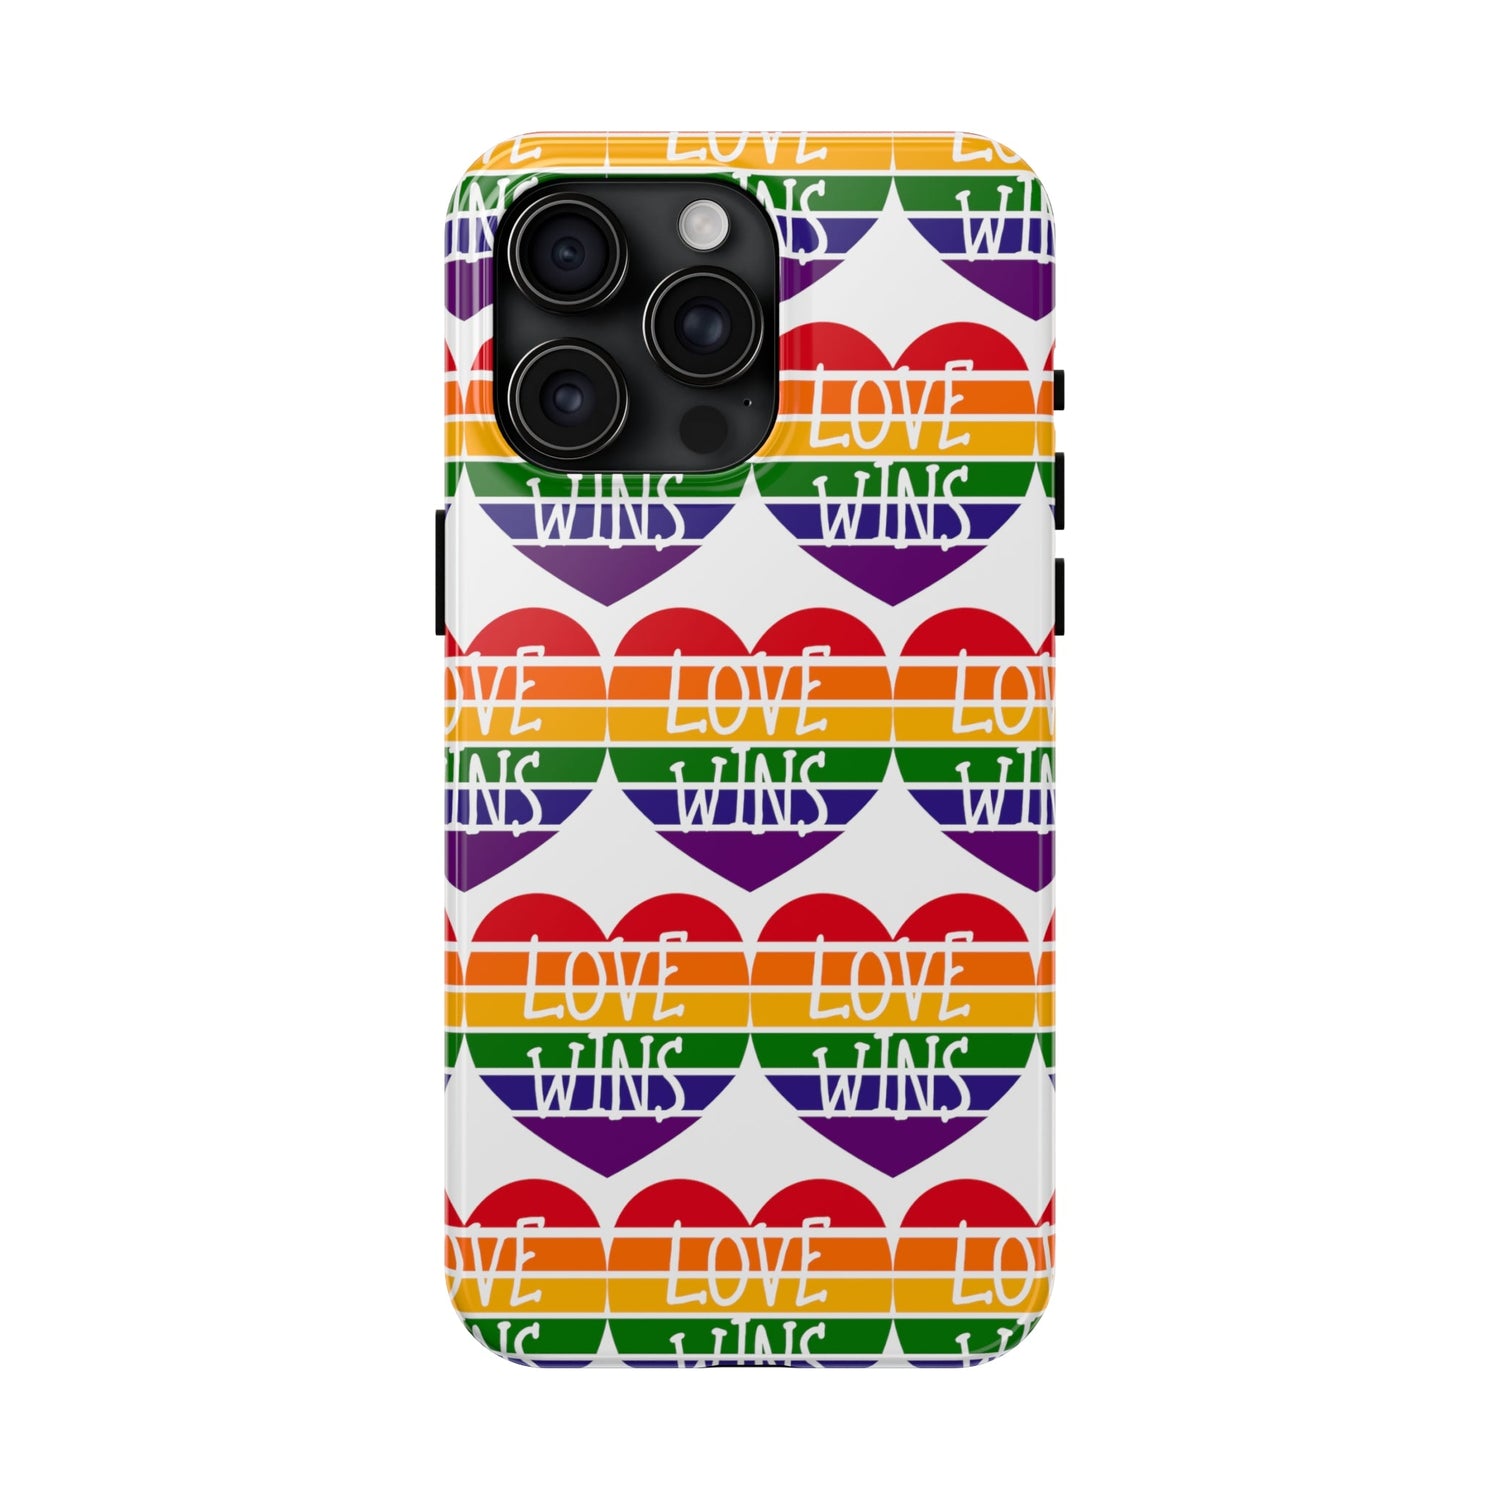 Love Wins Raibow Pride Heart iPhone "Tough Case" design by TheGlassyLass.com